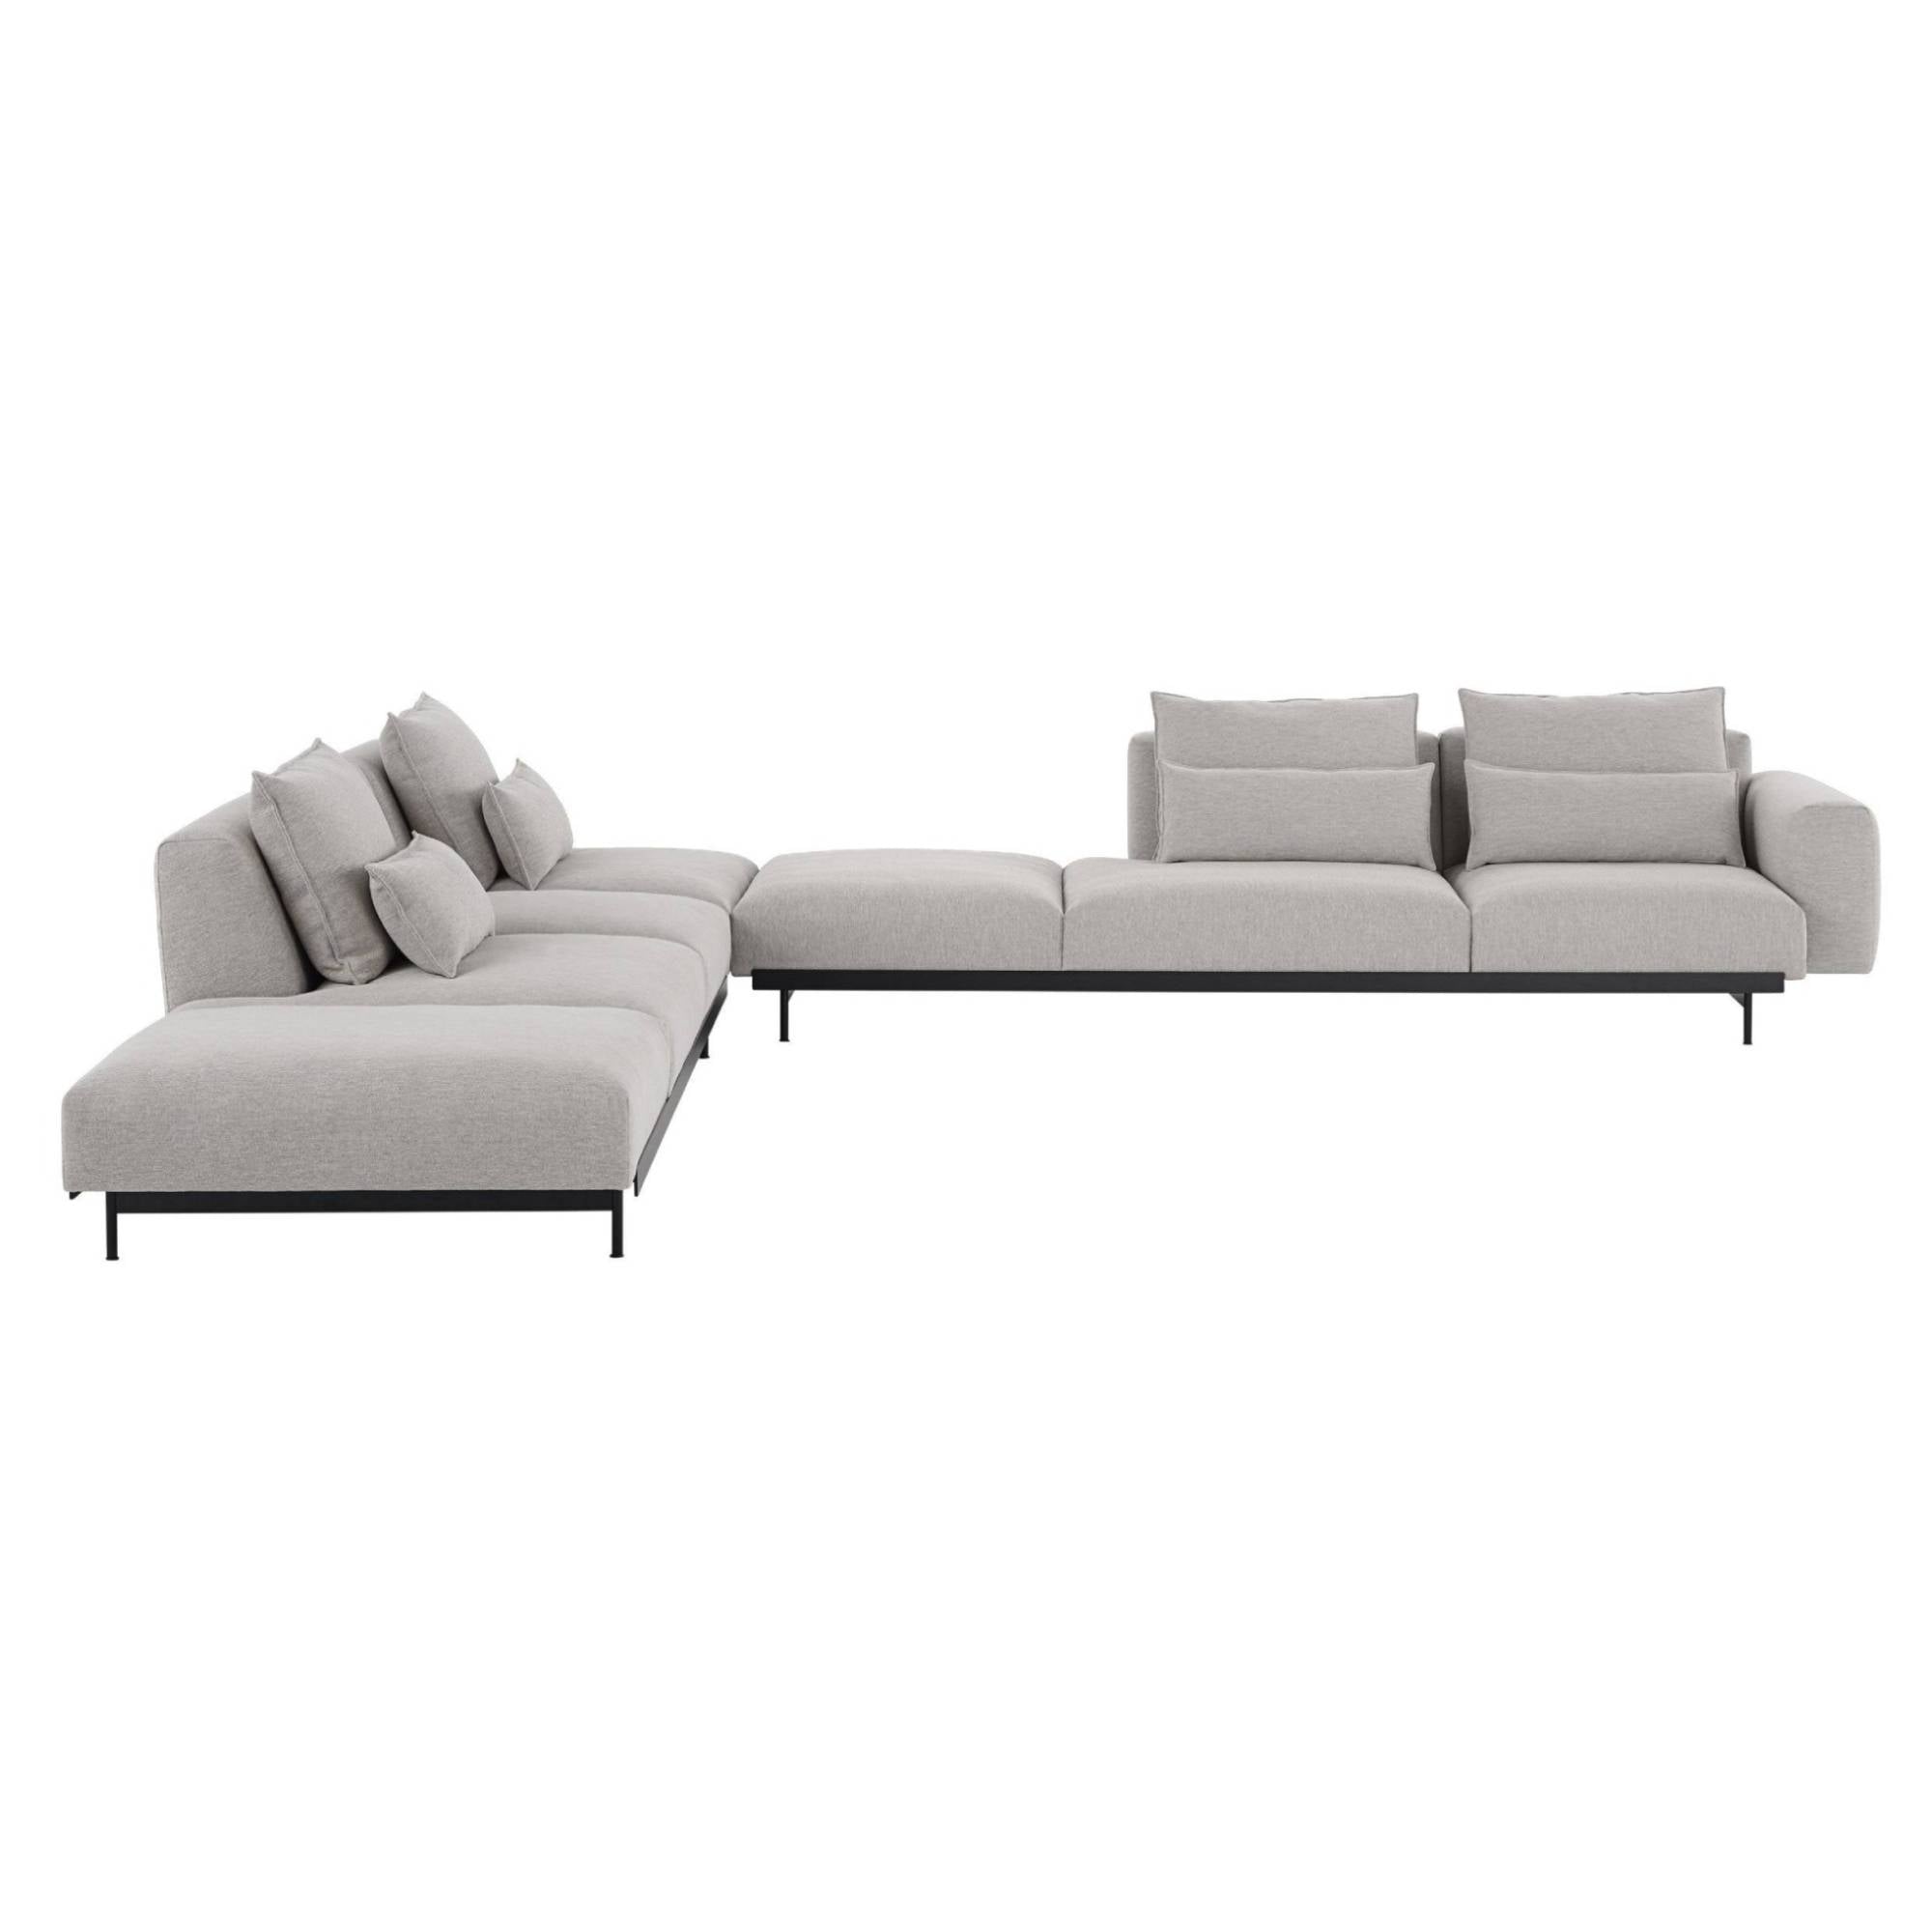 In Situ Modular Sofa: Corner + Configuration 8